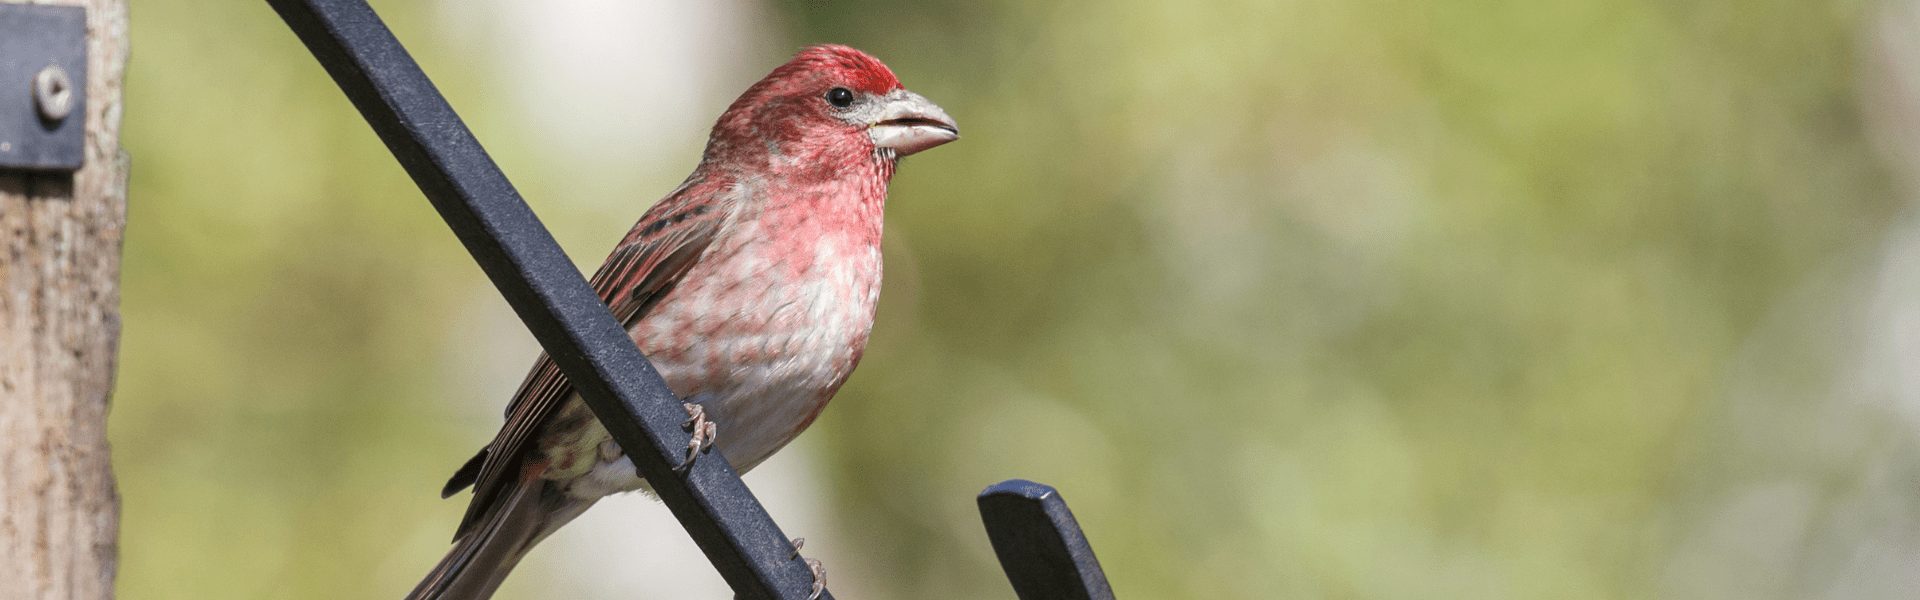 A Peek at Birding in Western North Carolina